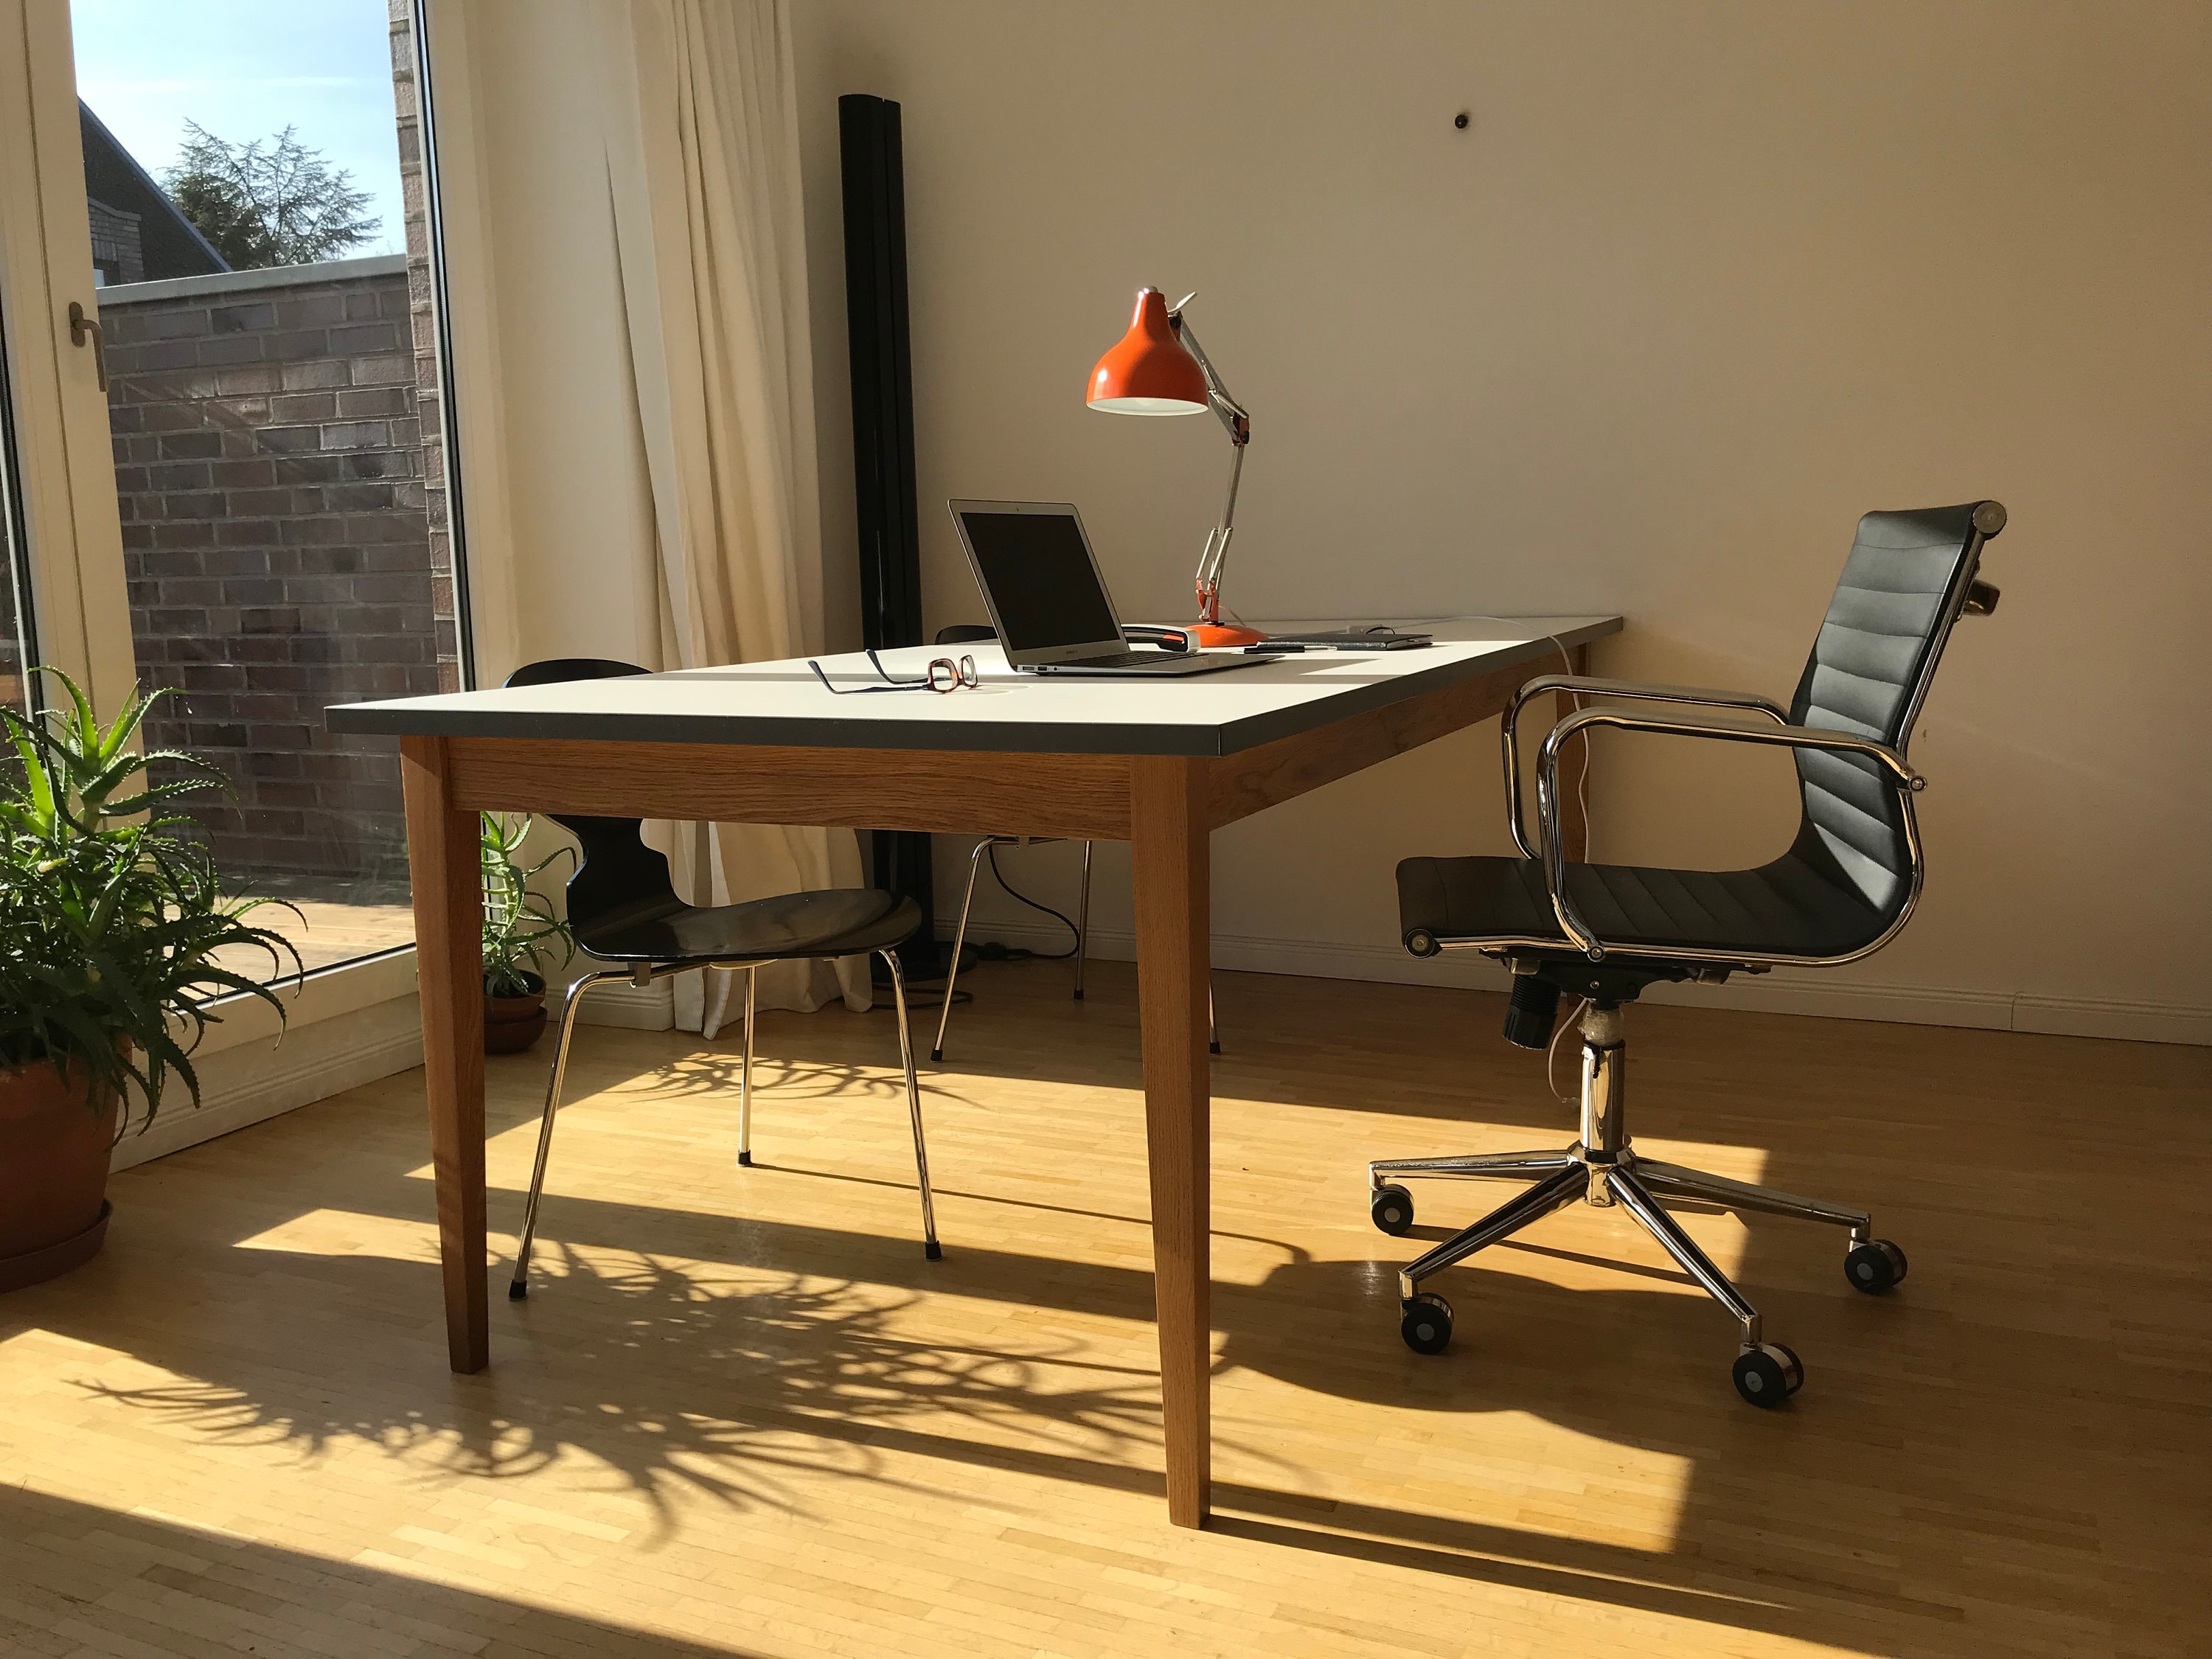 office desk white table top desk danish design REKORD furniture